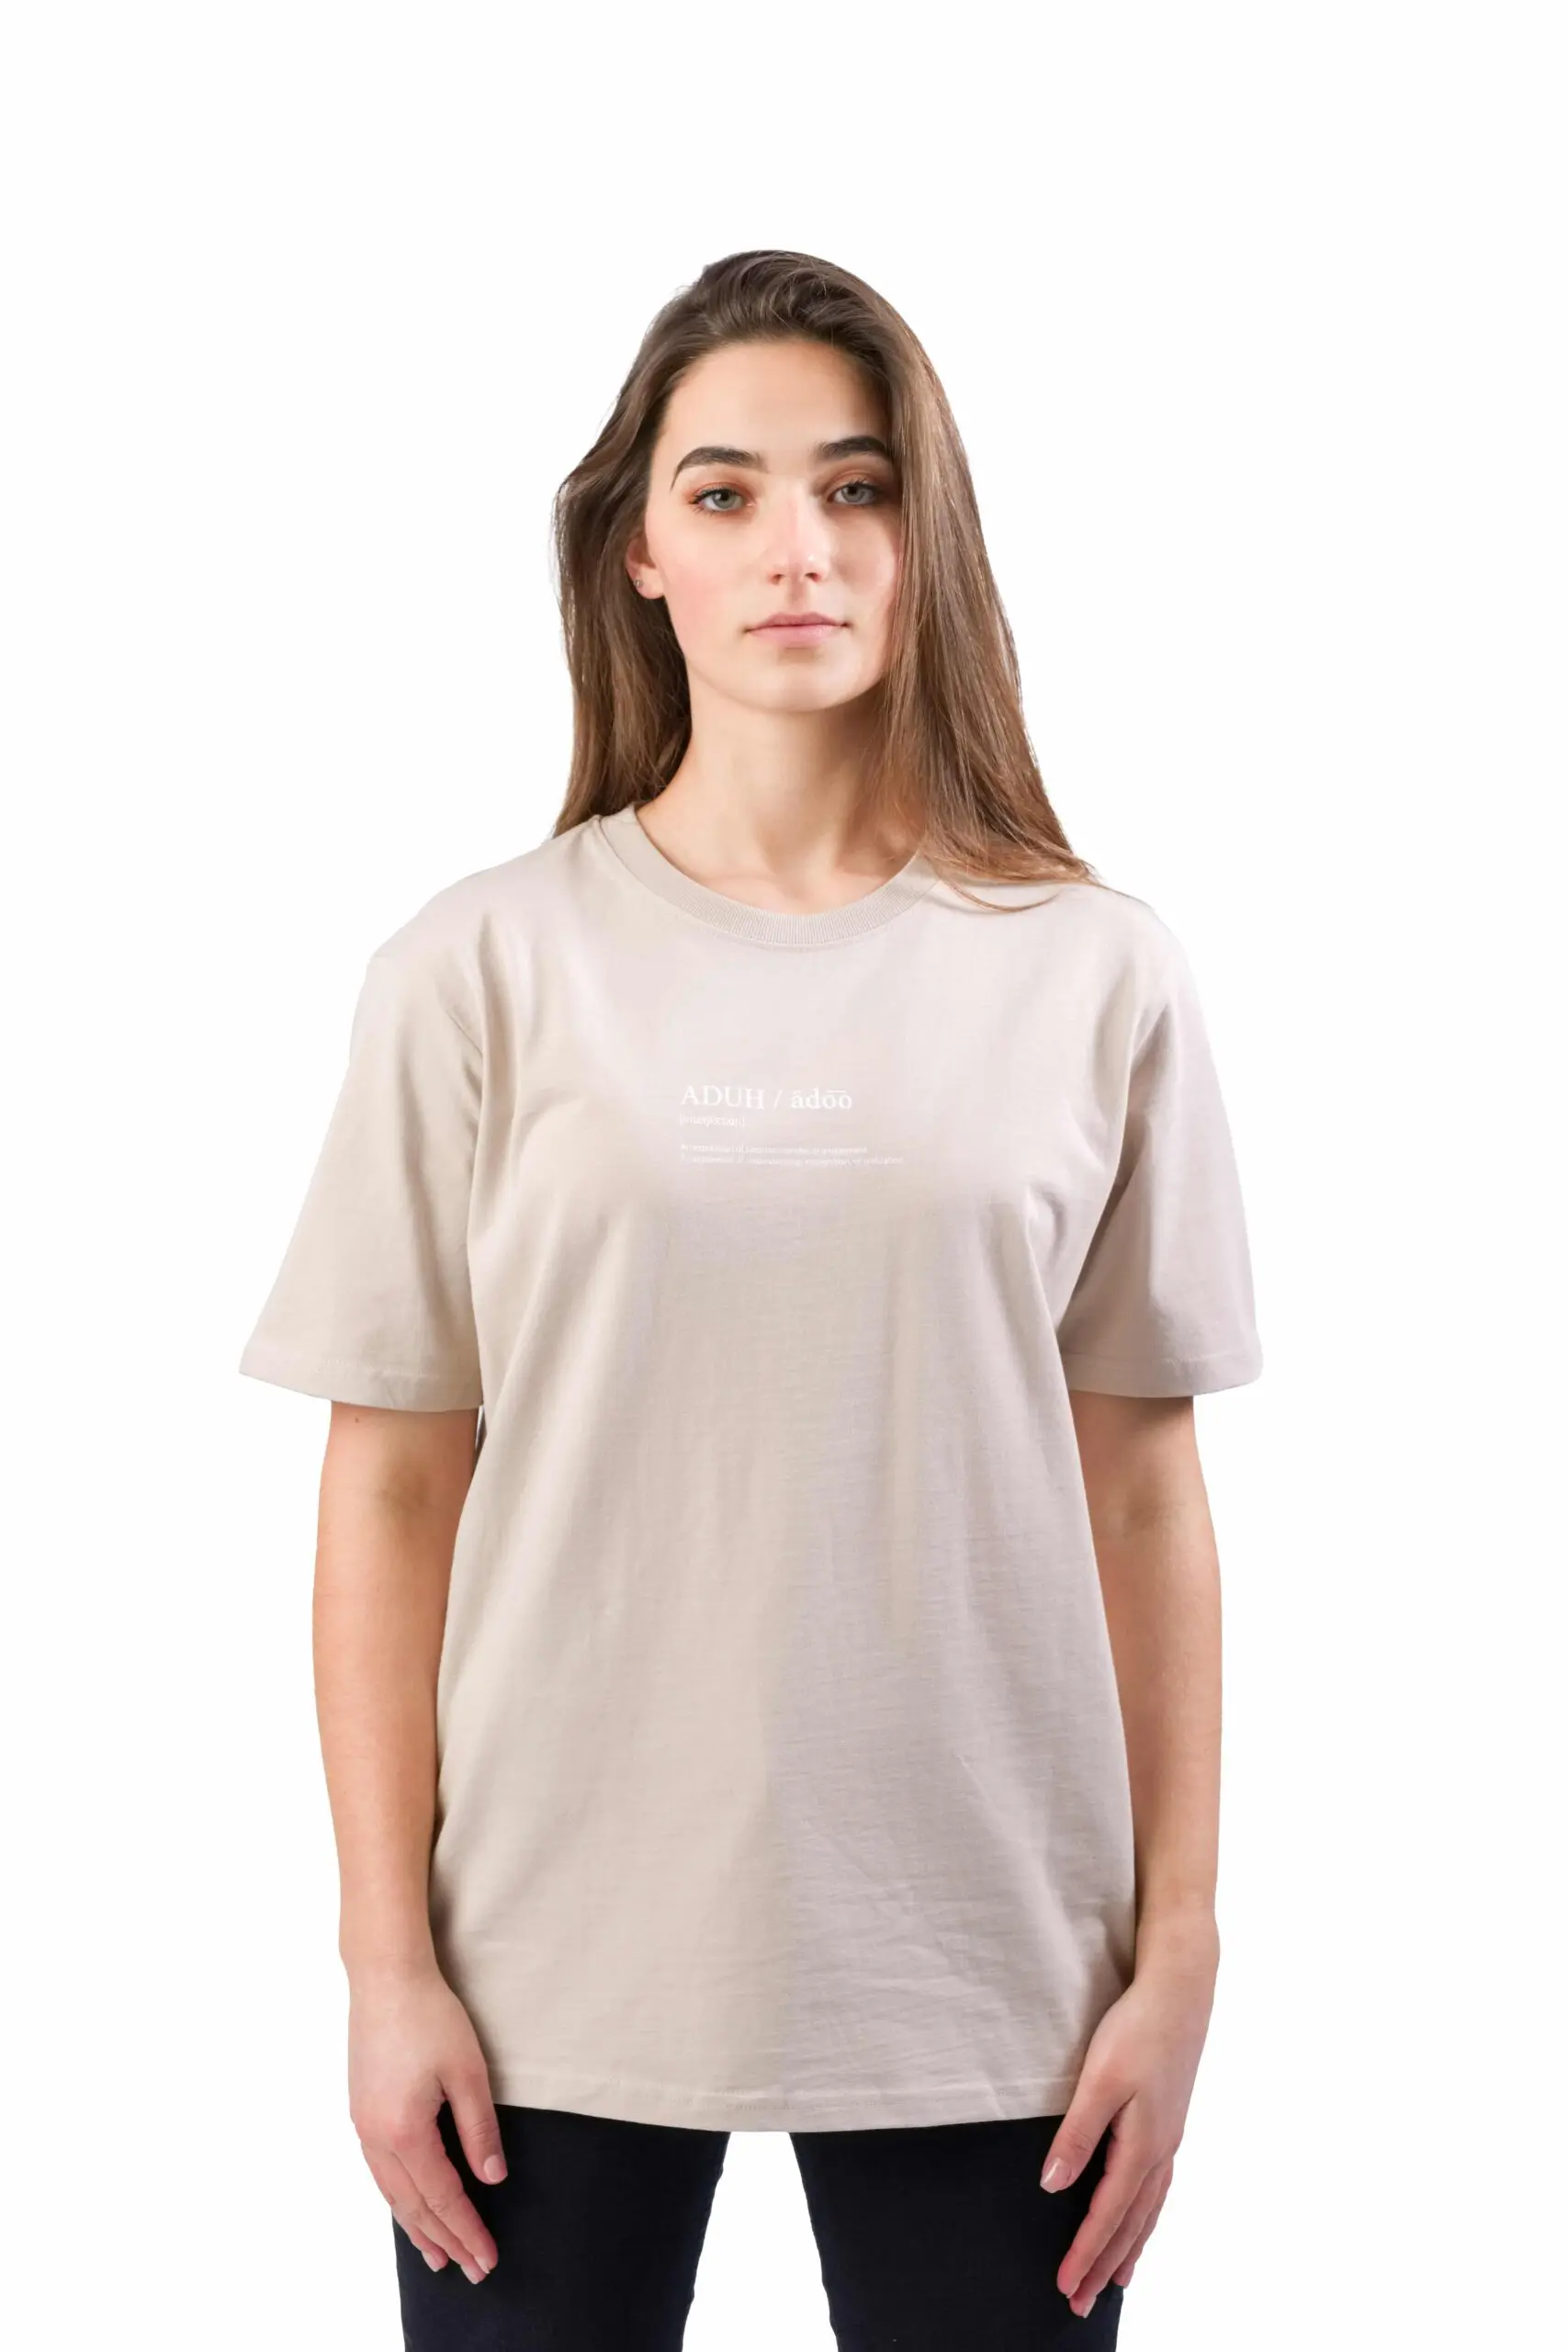 T-Shirt Berarti Beige 2